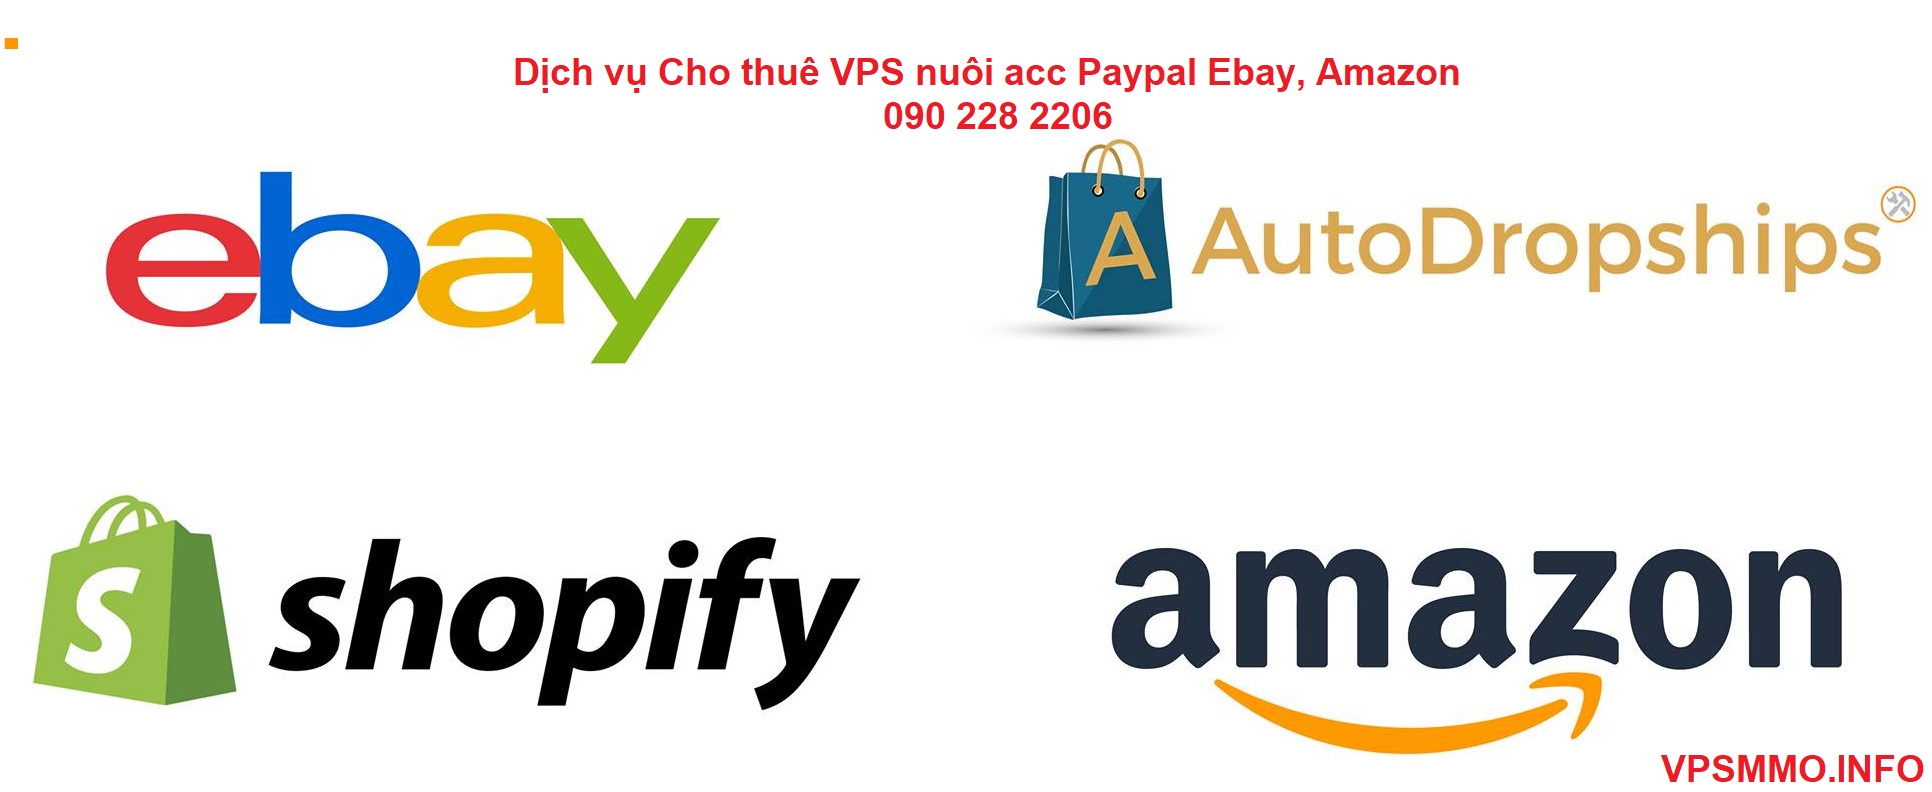 Cho thuê VPS nuôi reg acc Paypal Ebay Amazon Walmart…